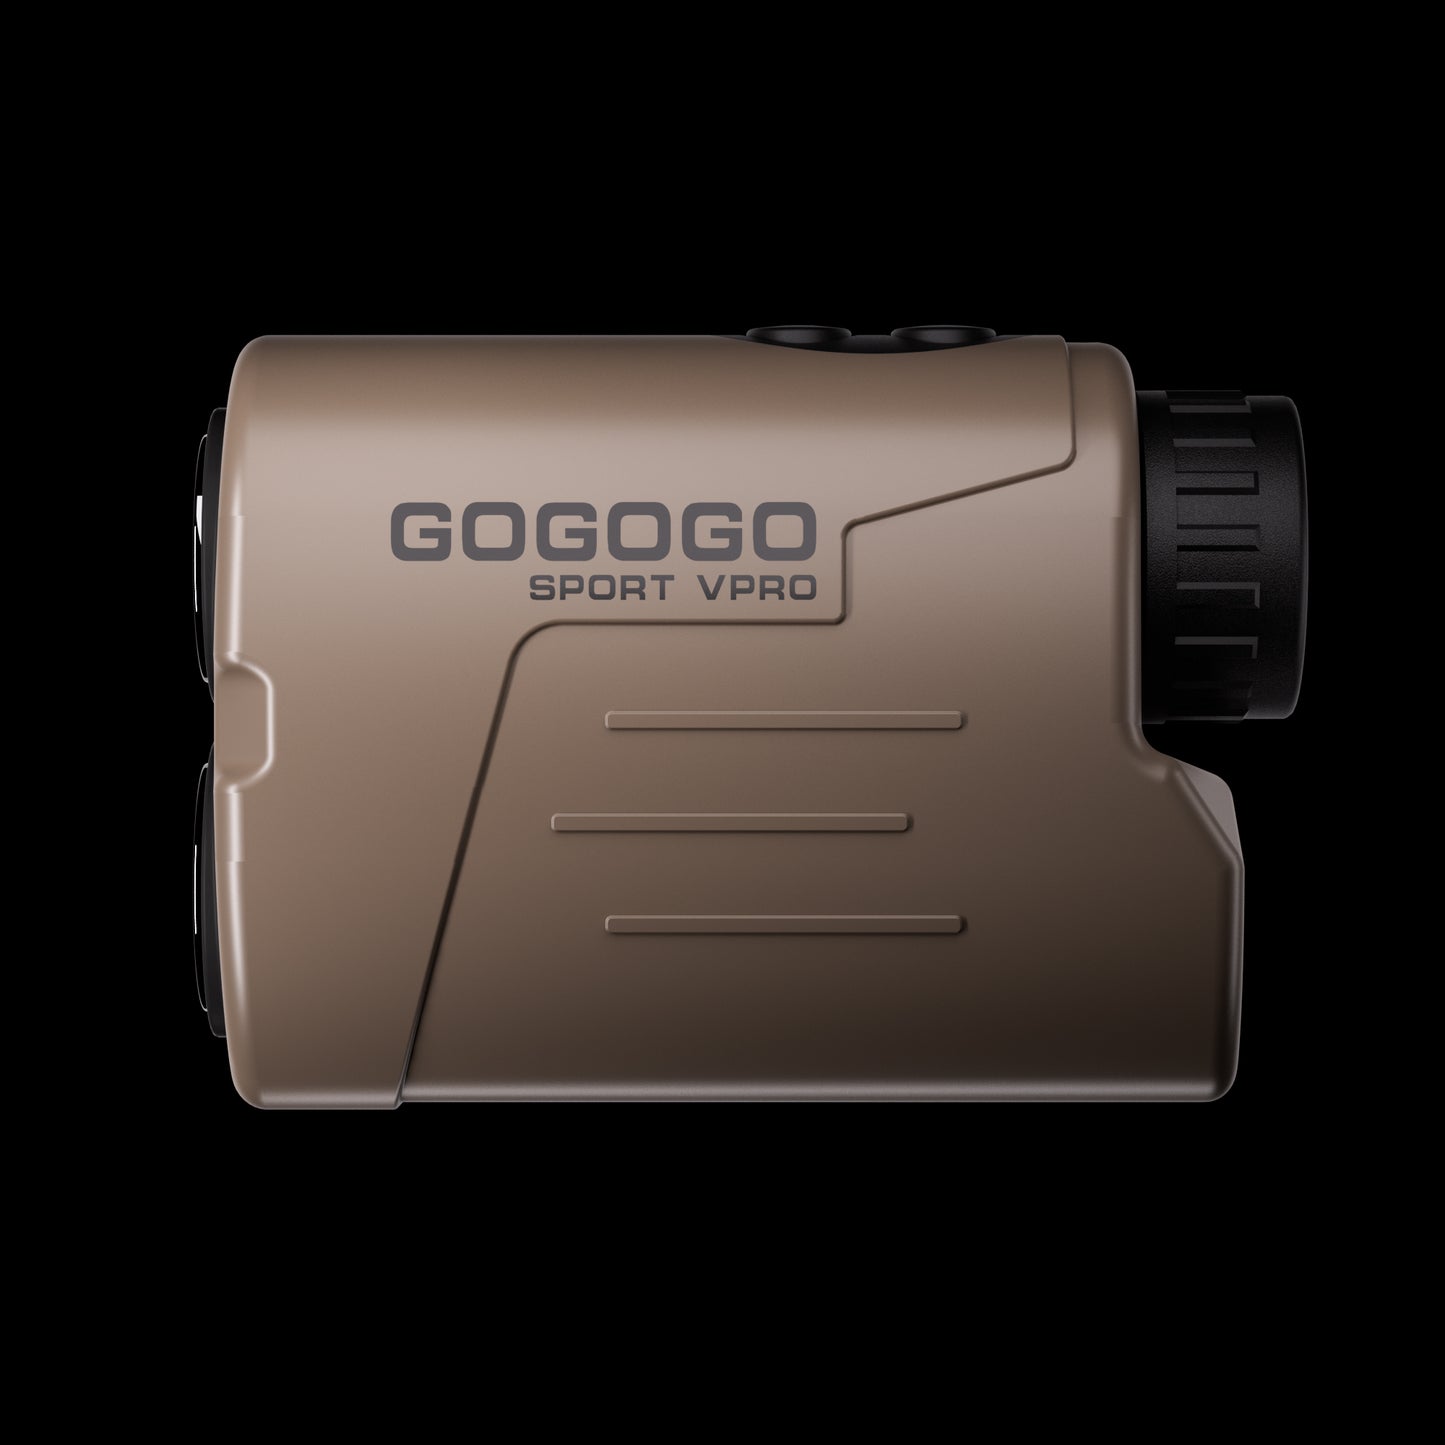 Hunting Rangefinder|Laser Hunting Rangefinder|Gogogo GS03D Desert Yellow 1200Y